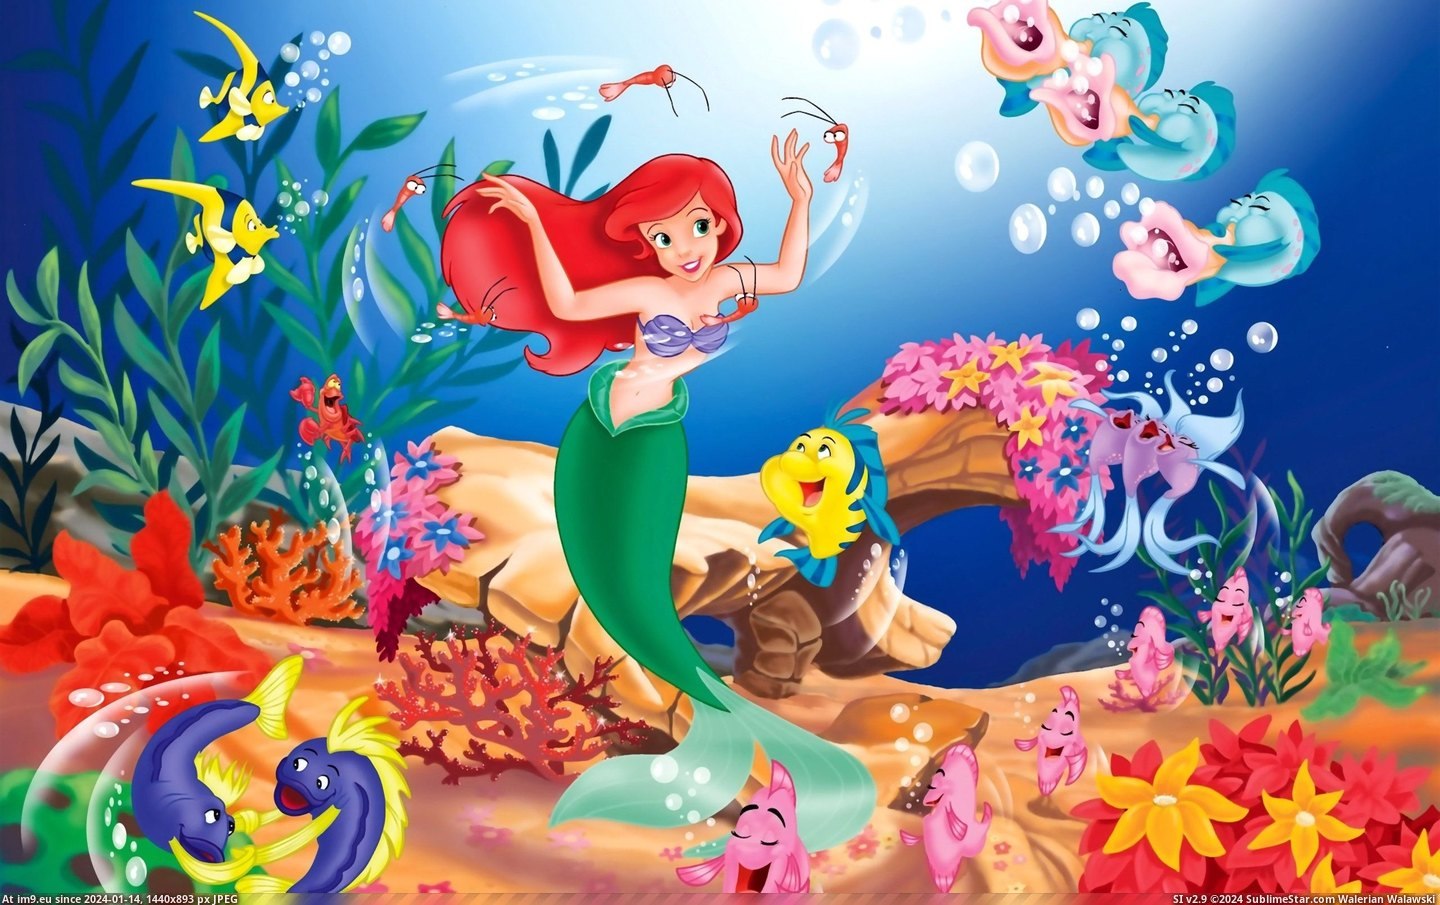 #Wallpaper #Disney #Mermaid #Wide Disney The Little Mermaid Wide HD Wallpaper Pic. (Изображение из альбом Unique HD Wallpapers))